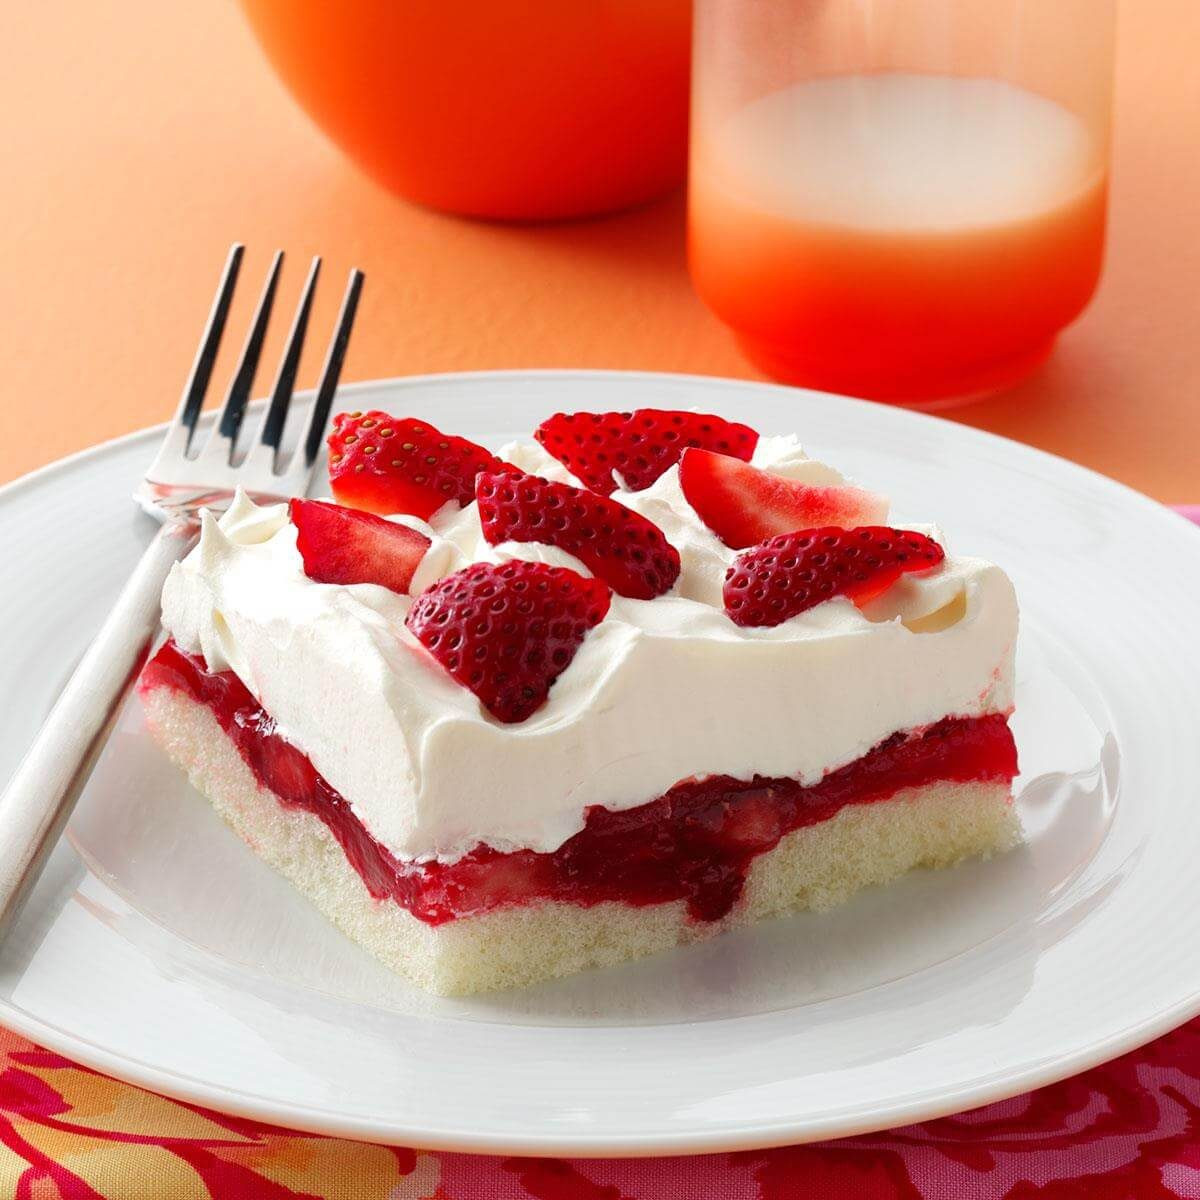 Taste Of Home Recipes Desserts
 Strawberry Ladyfinger Dessert Recipe